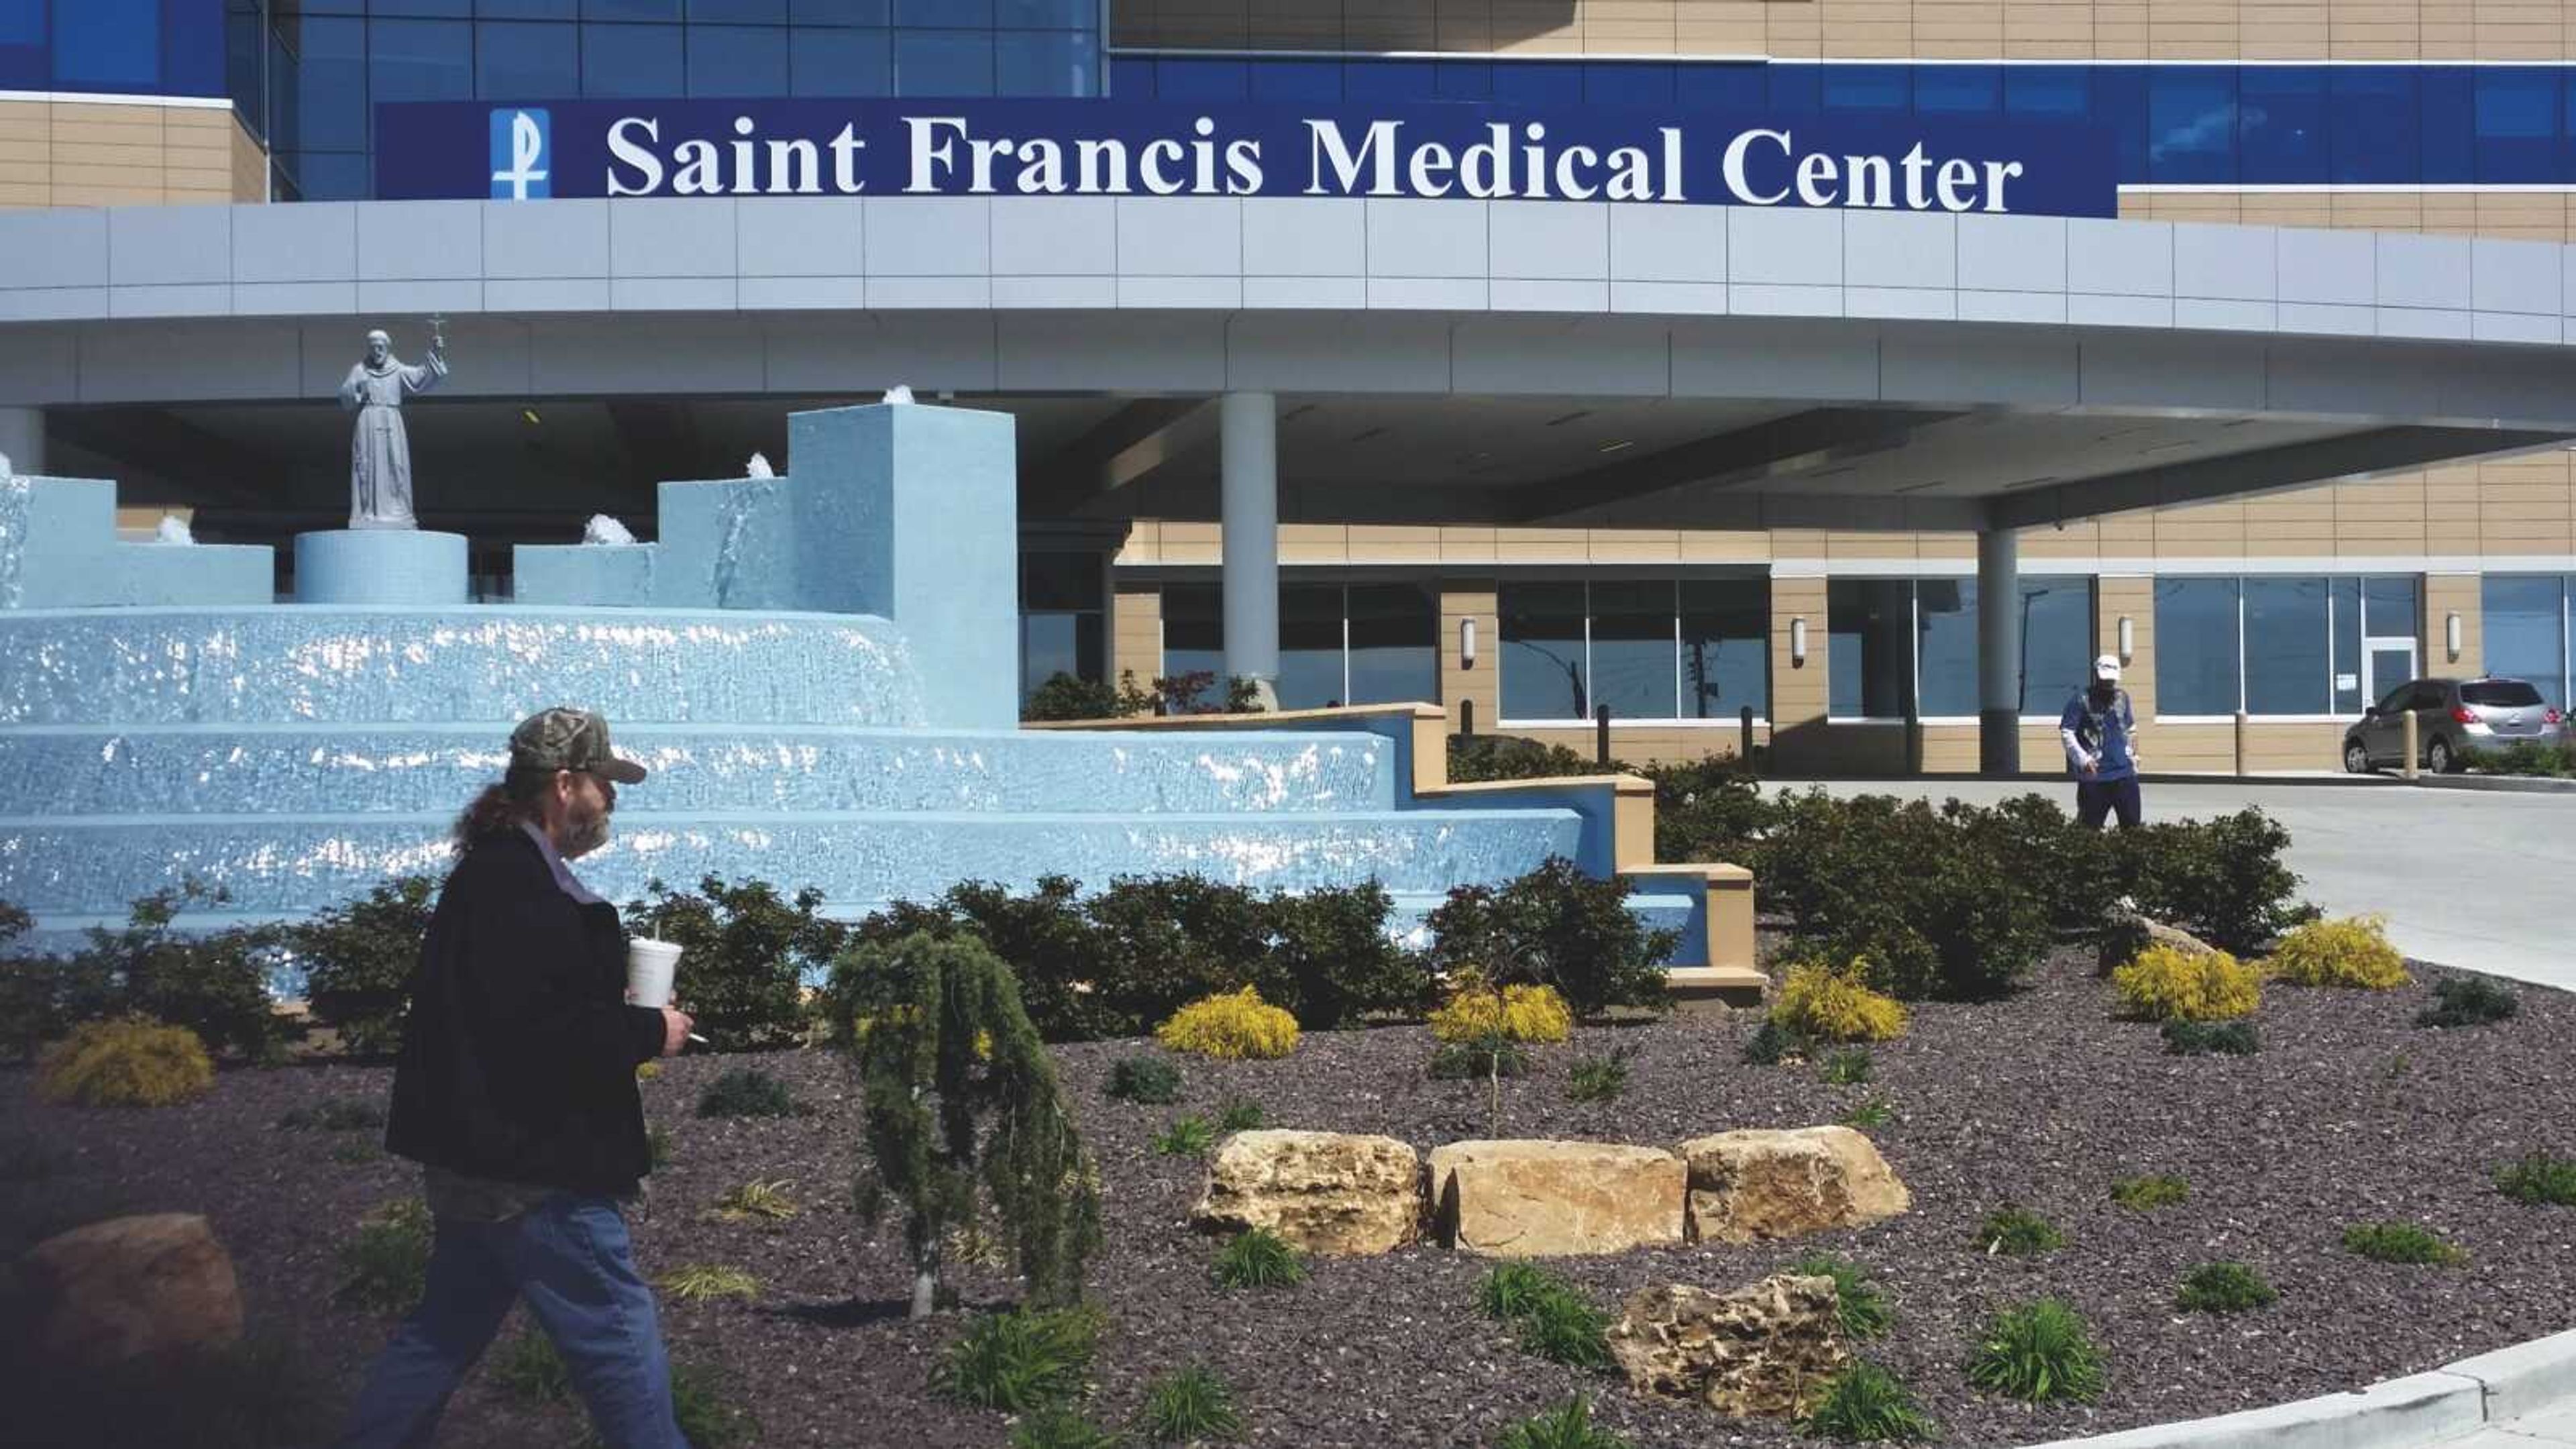 Southeast professor undertakes internship at Saint Francis